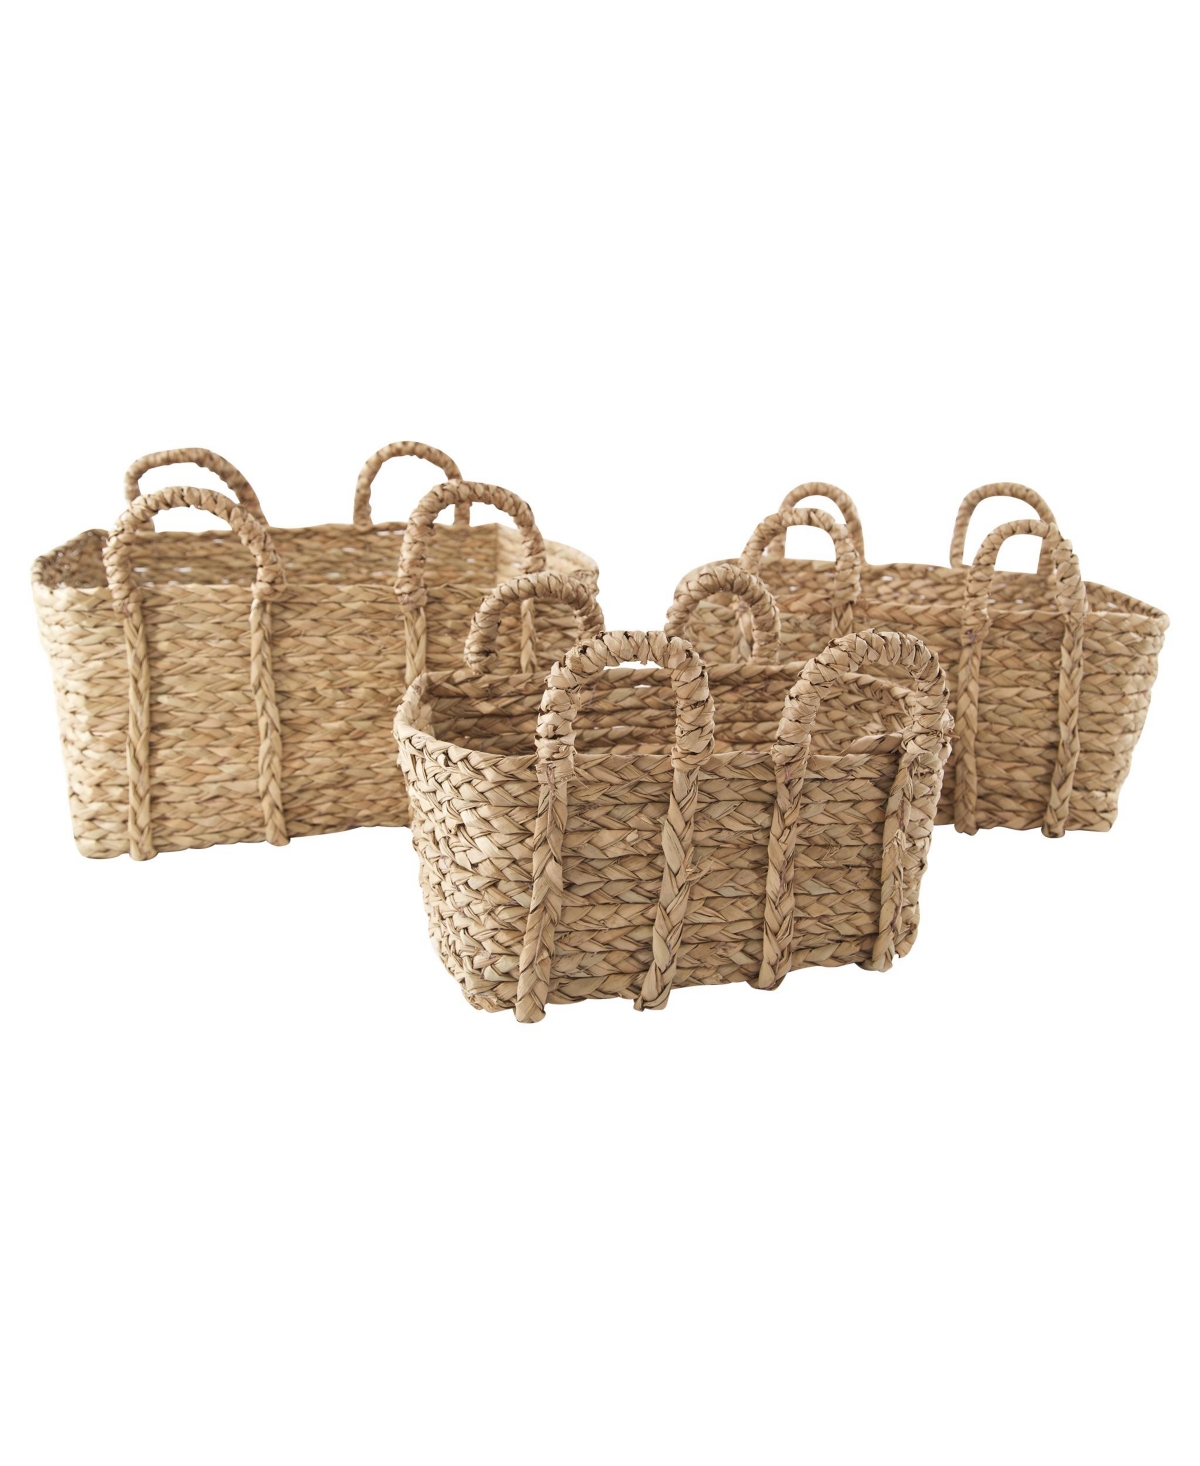 Jumbo Rectangle Braided Rush Baskets, Set of 3 - Natural